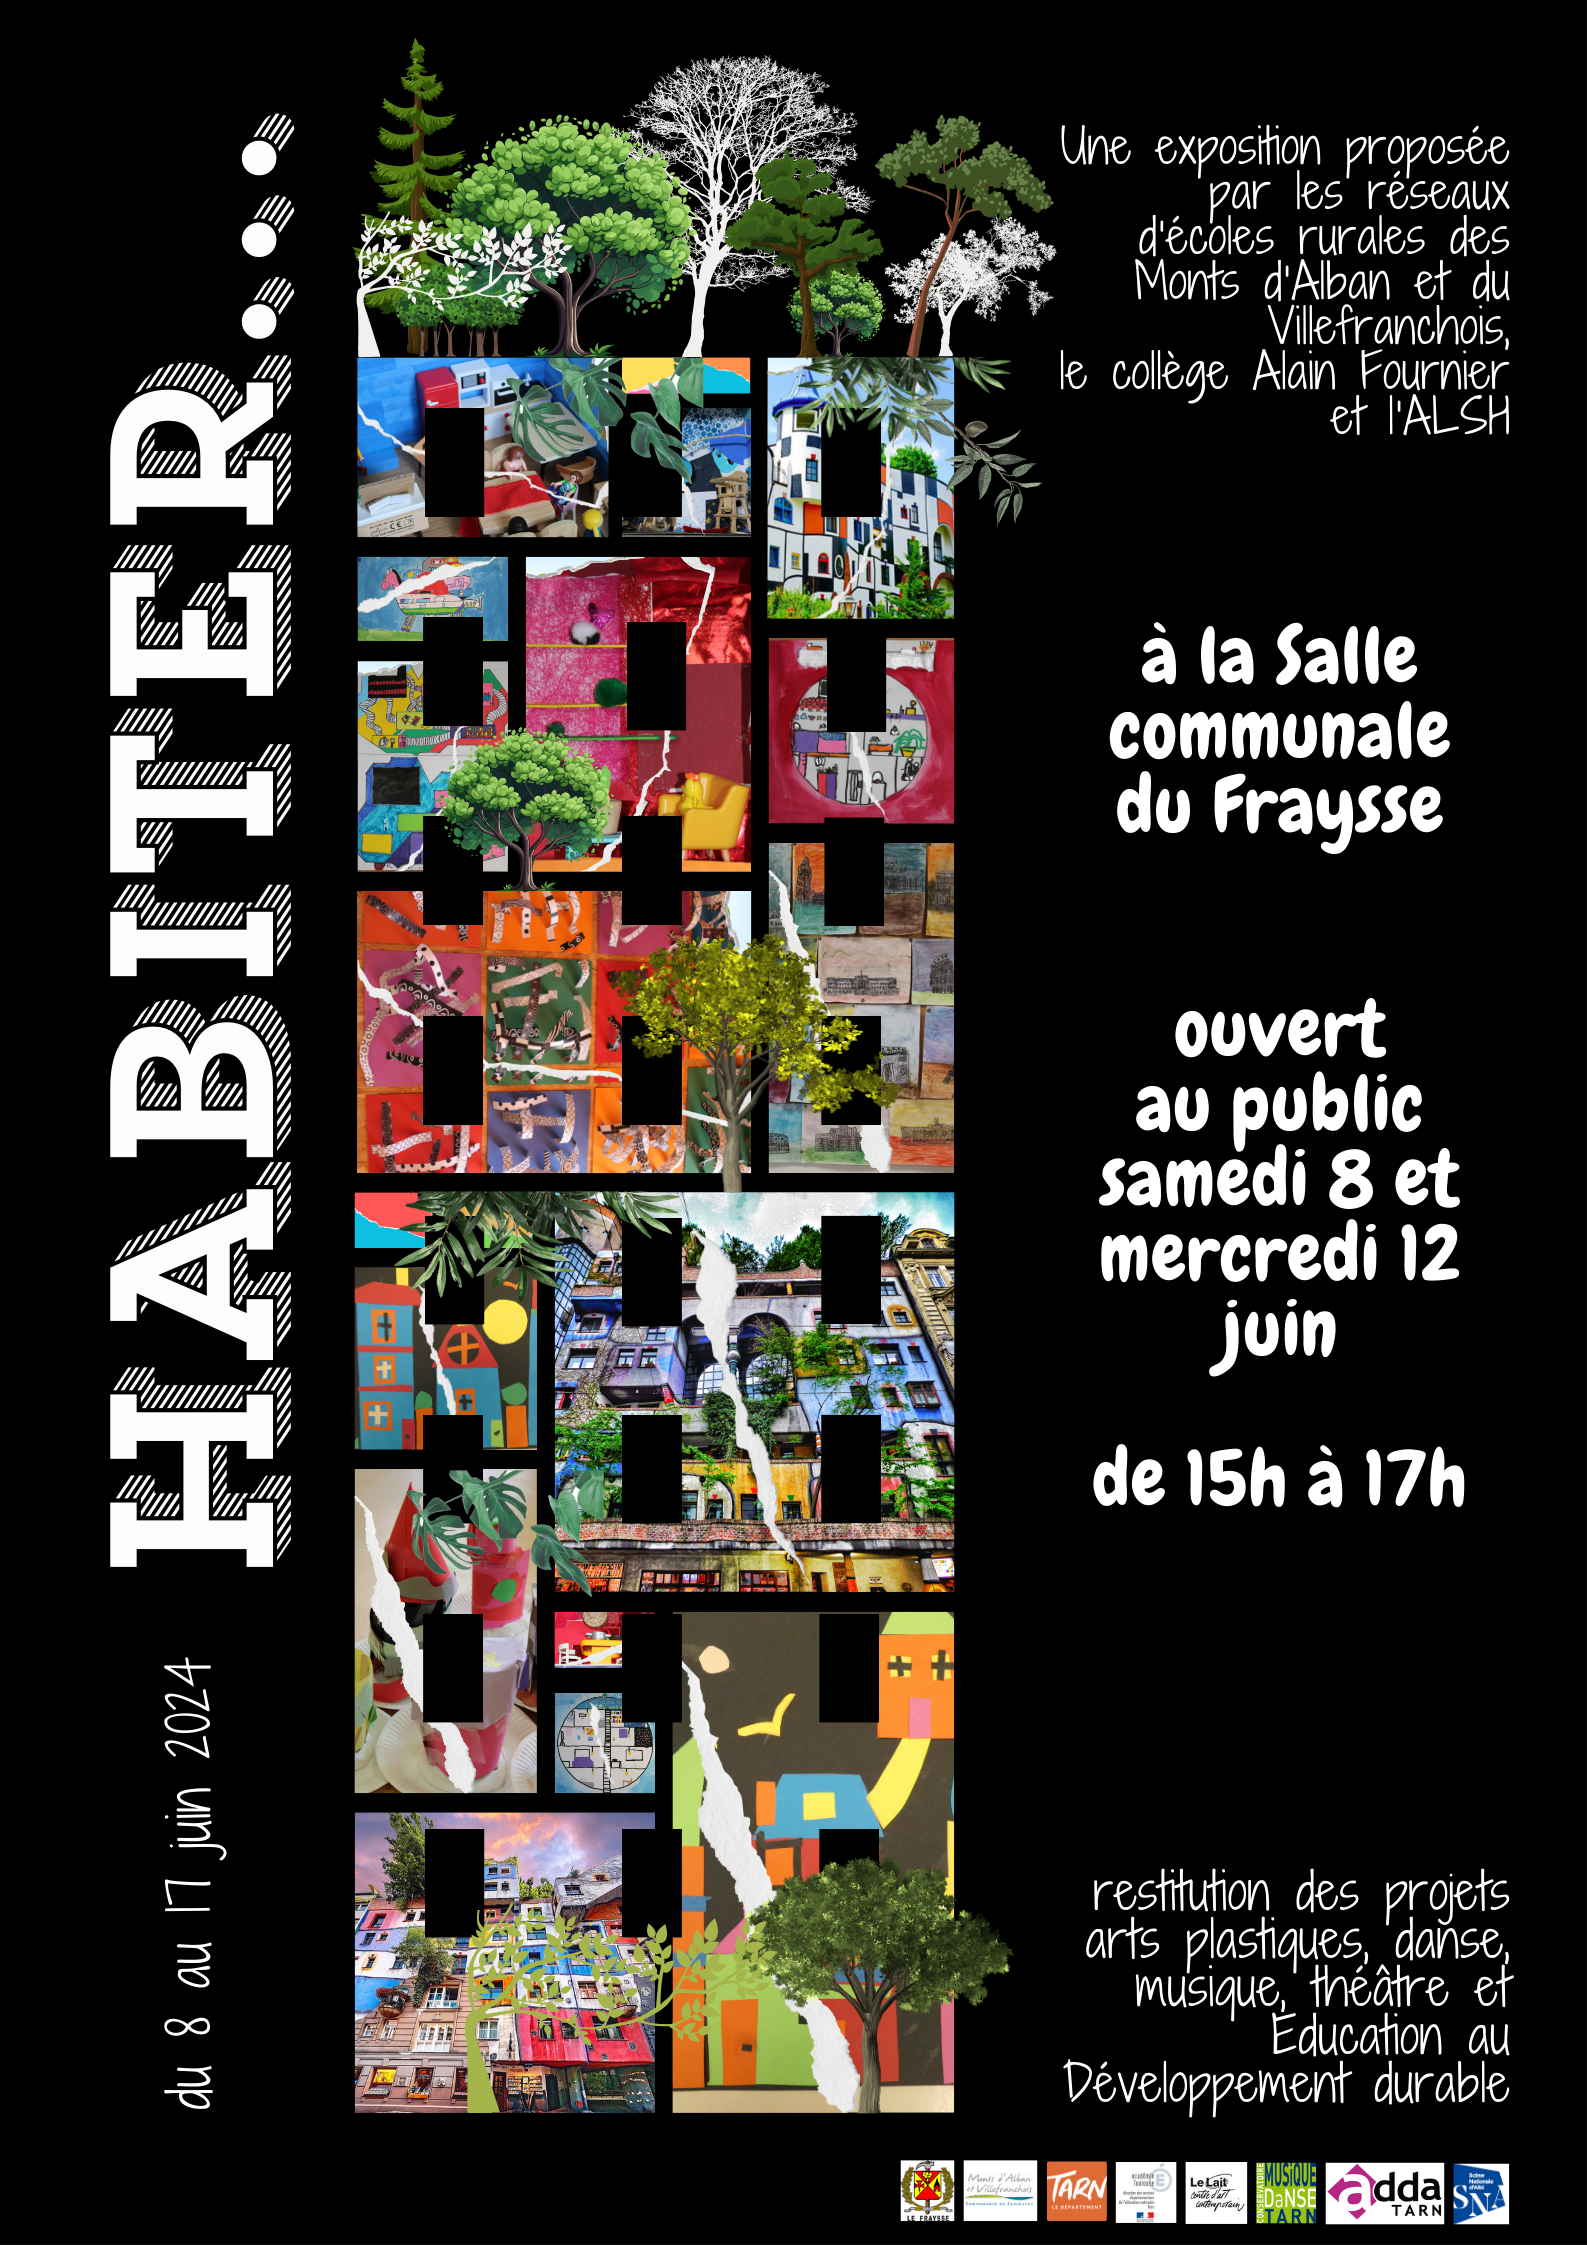 Exposition "Habiter"